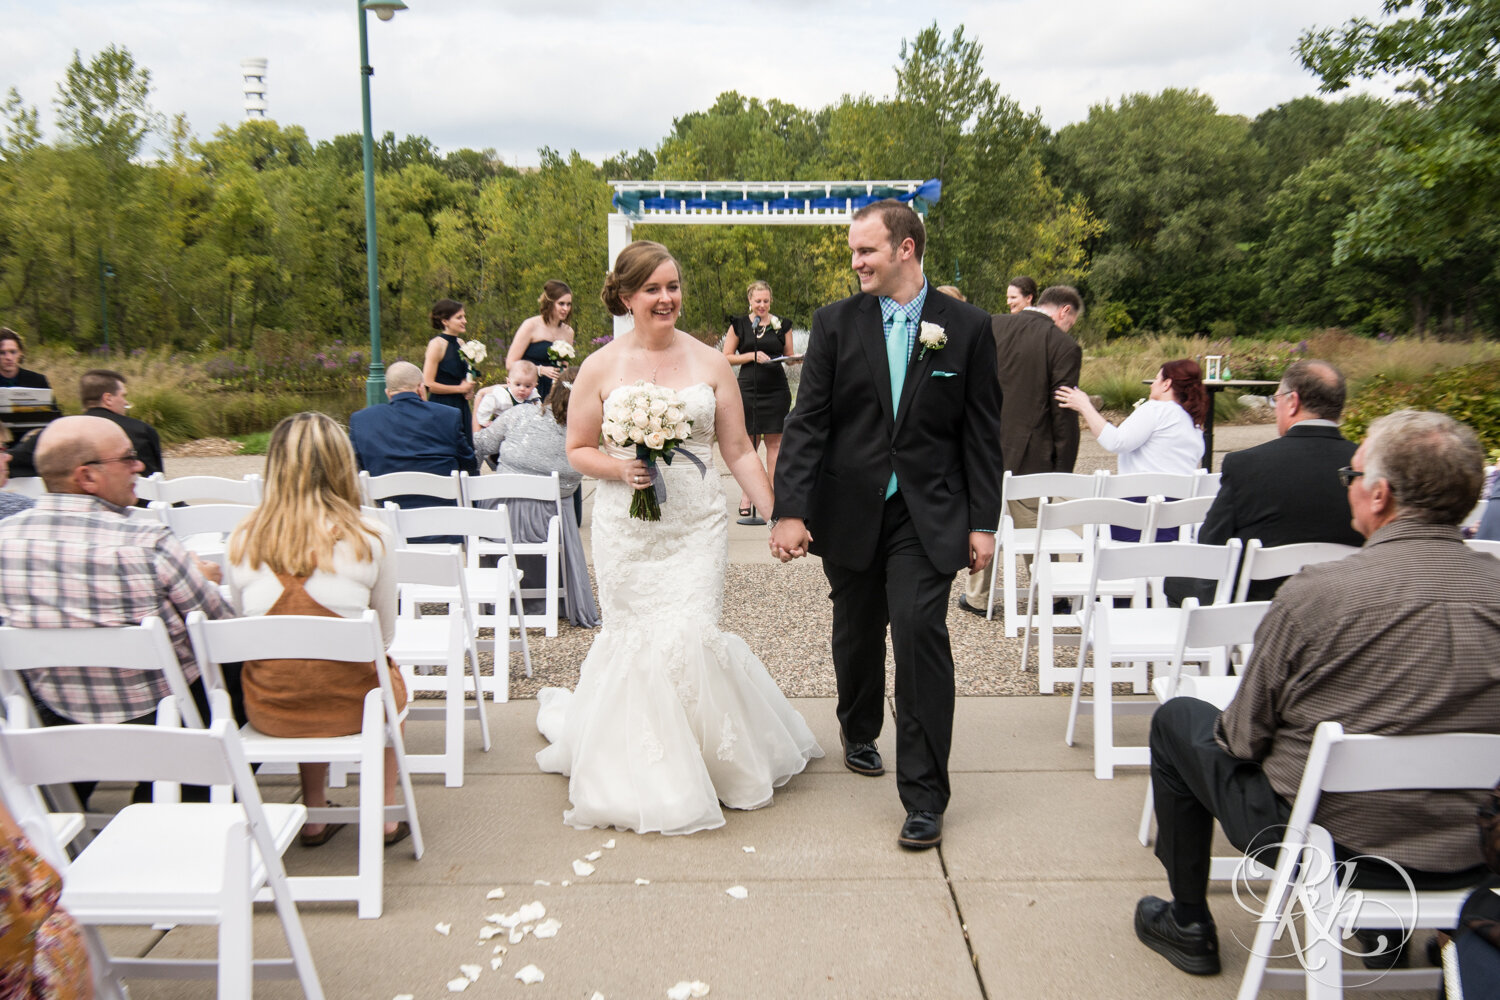 Bride and groom walk at outdoor wedding ceremony at Eagan Community Center in Eagan, Minnesota.